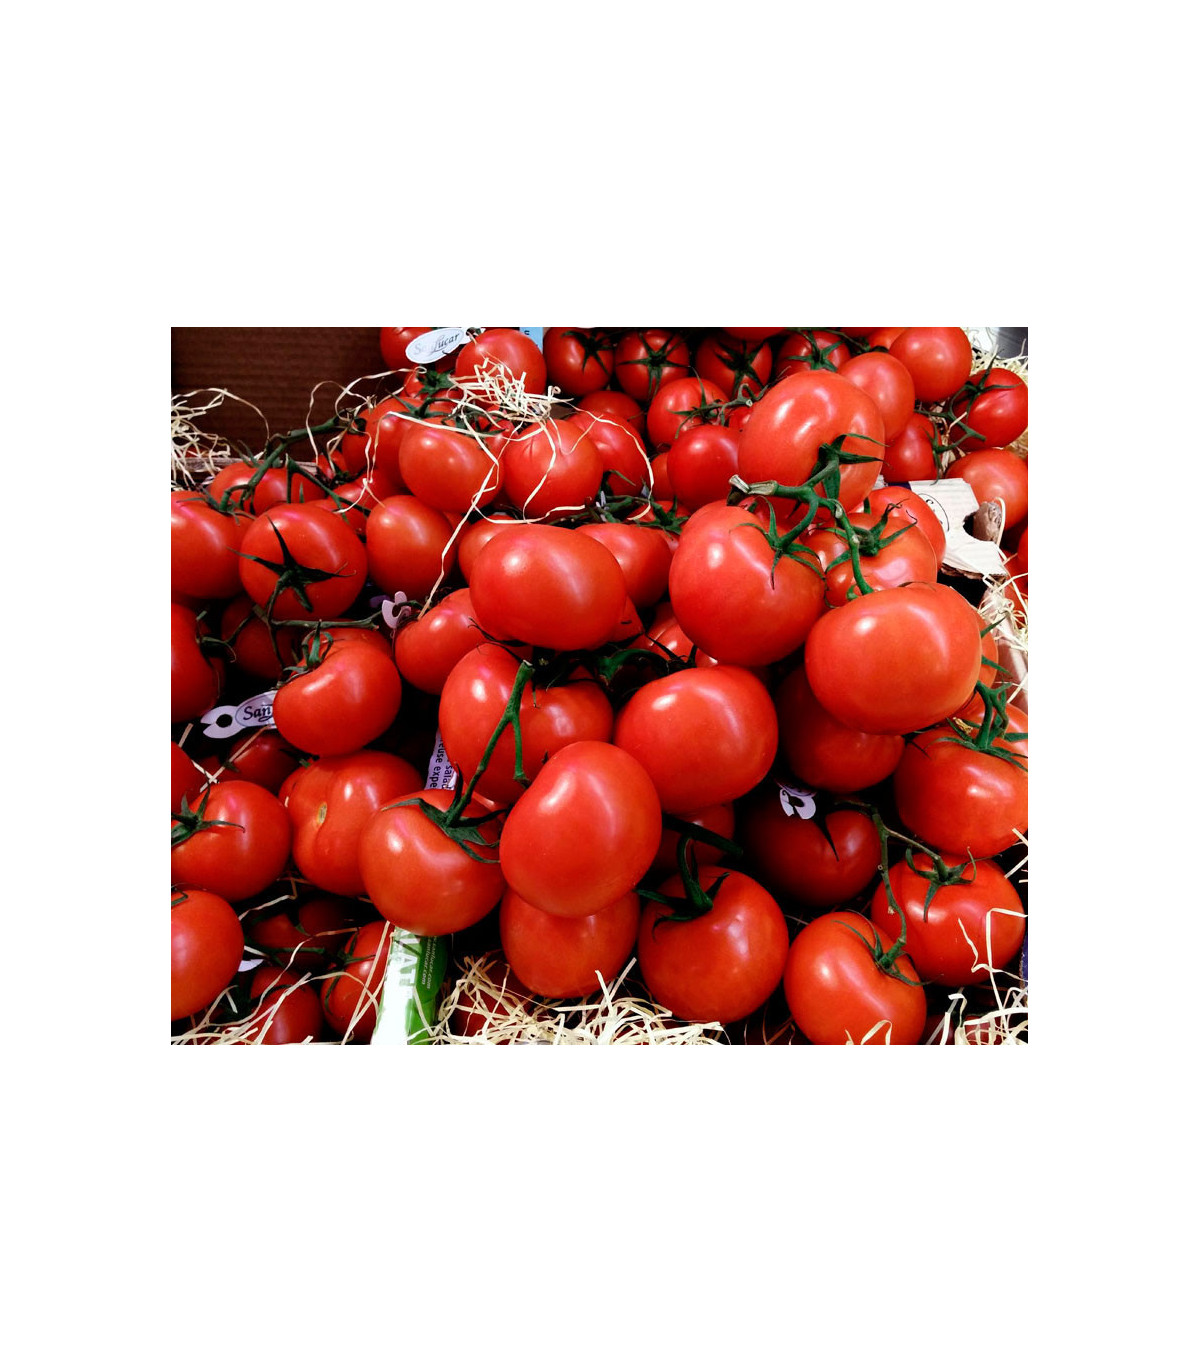 Bio Paradajka poľná zakrslá Saint Pierre - Lycopersicon esculentum - predaj bio semien rajčiaka - 7 ks